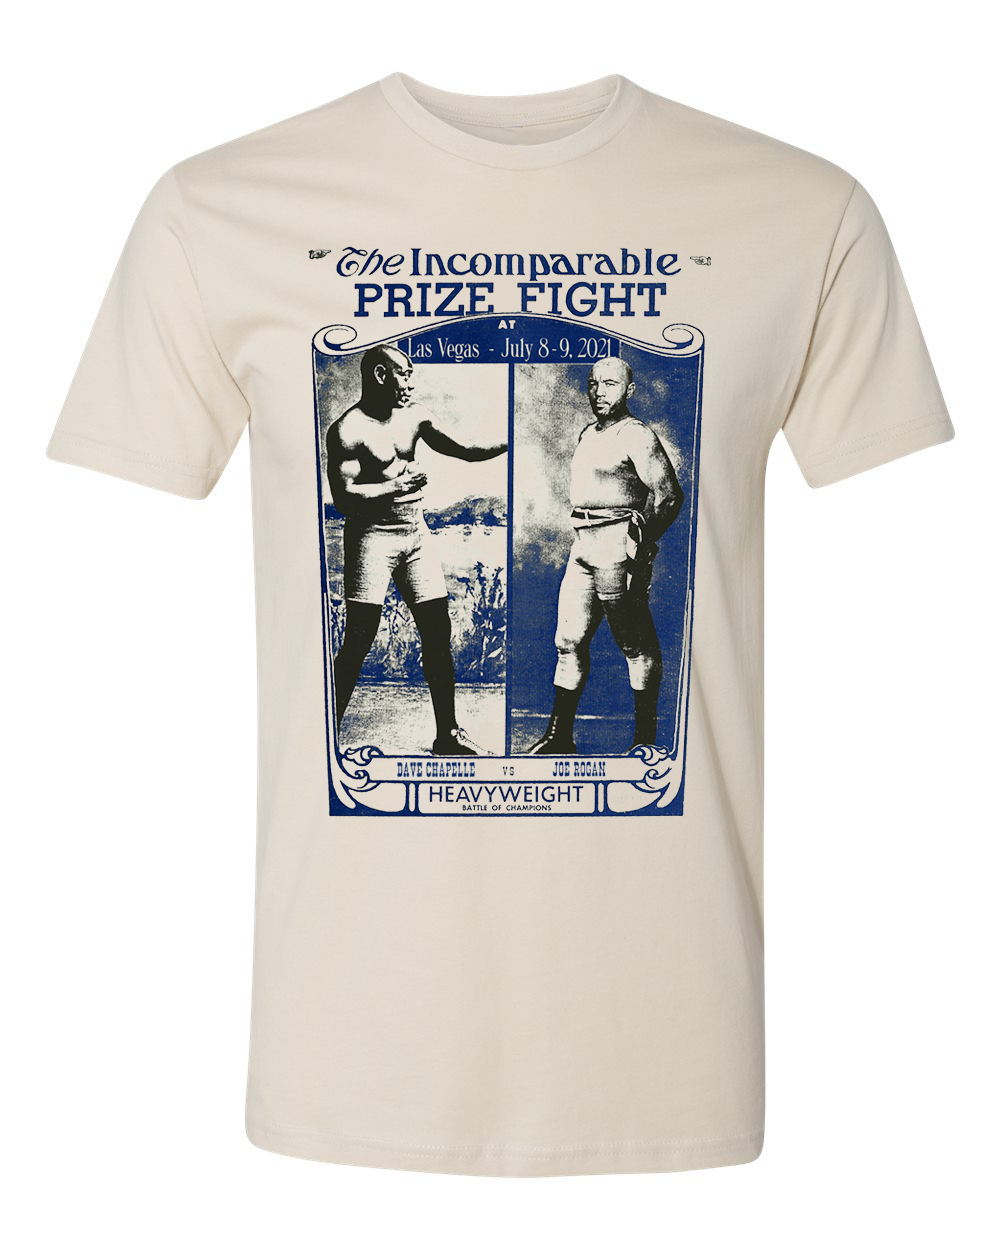 Dave Chappelle x Joe Rogan - Prize Fight Tee